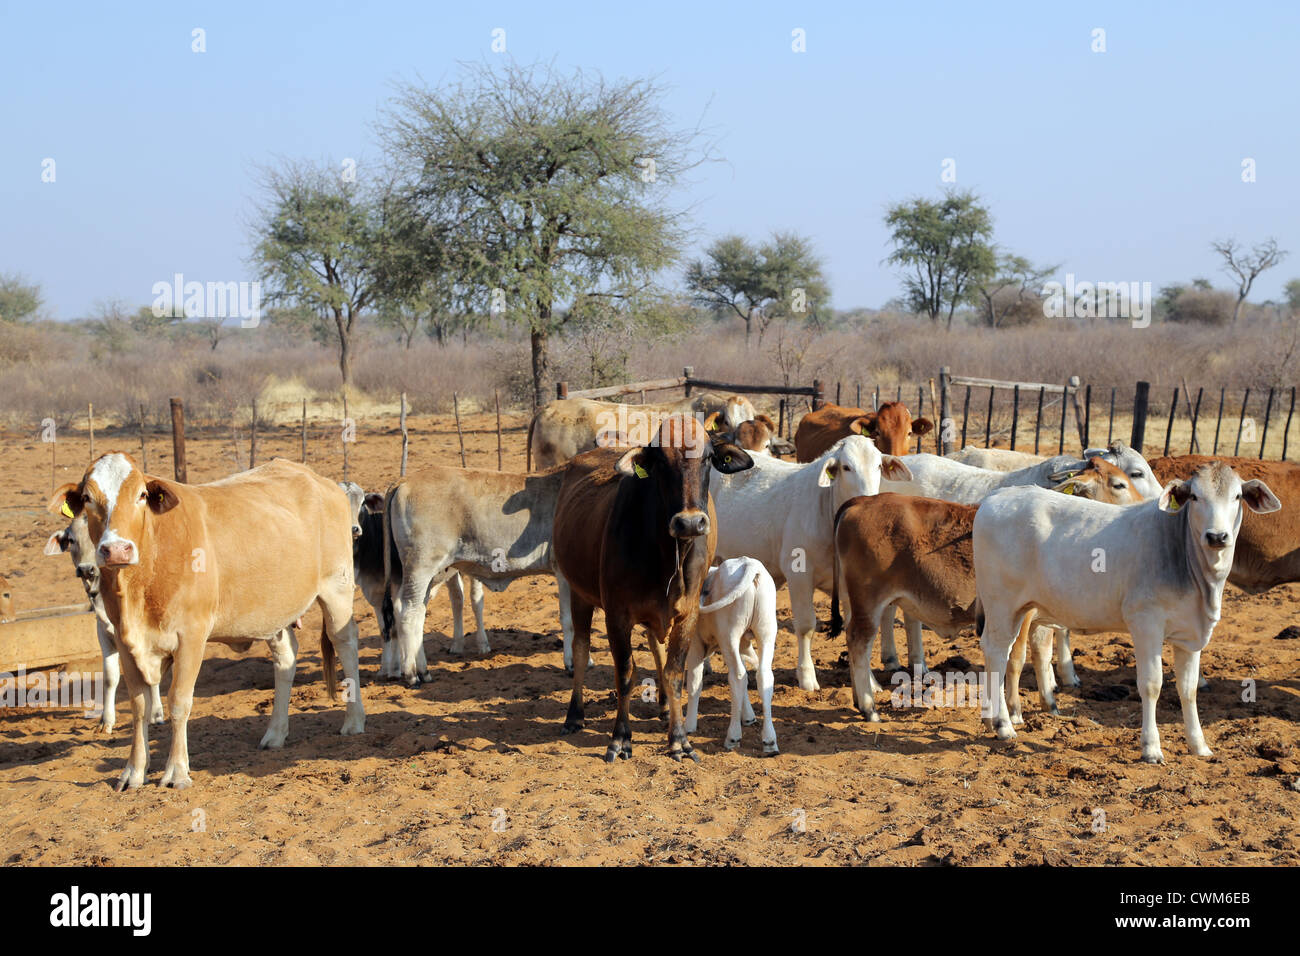 cows and cattle on sandy pasture, Kalahari desert, Namibia Stock Photo